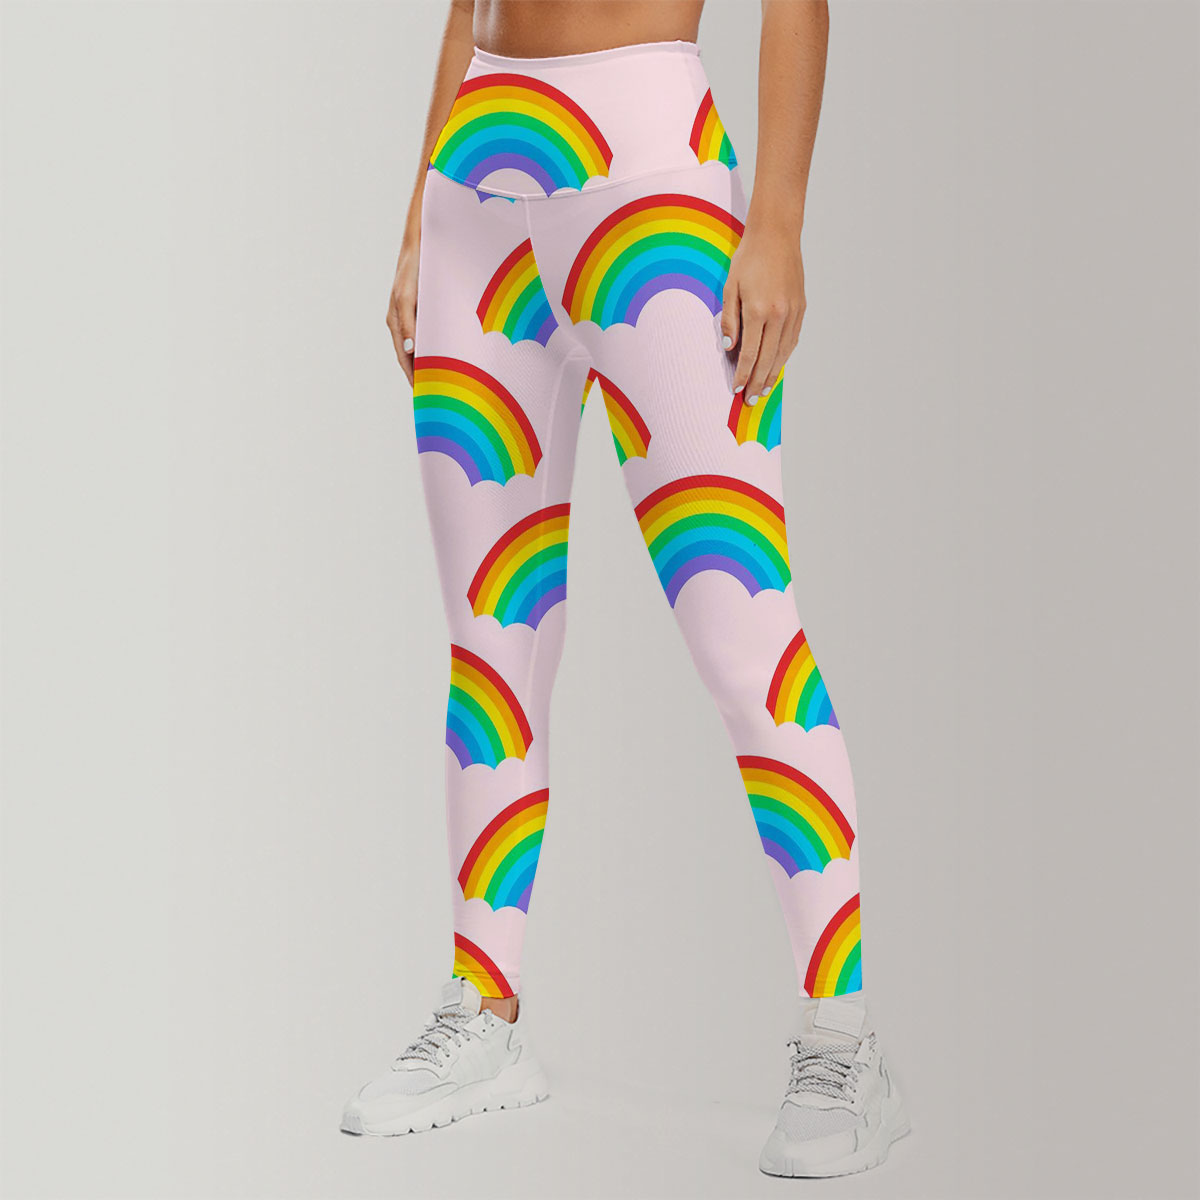 Seamless Rainbow Patterns Legging